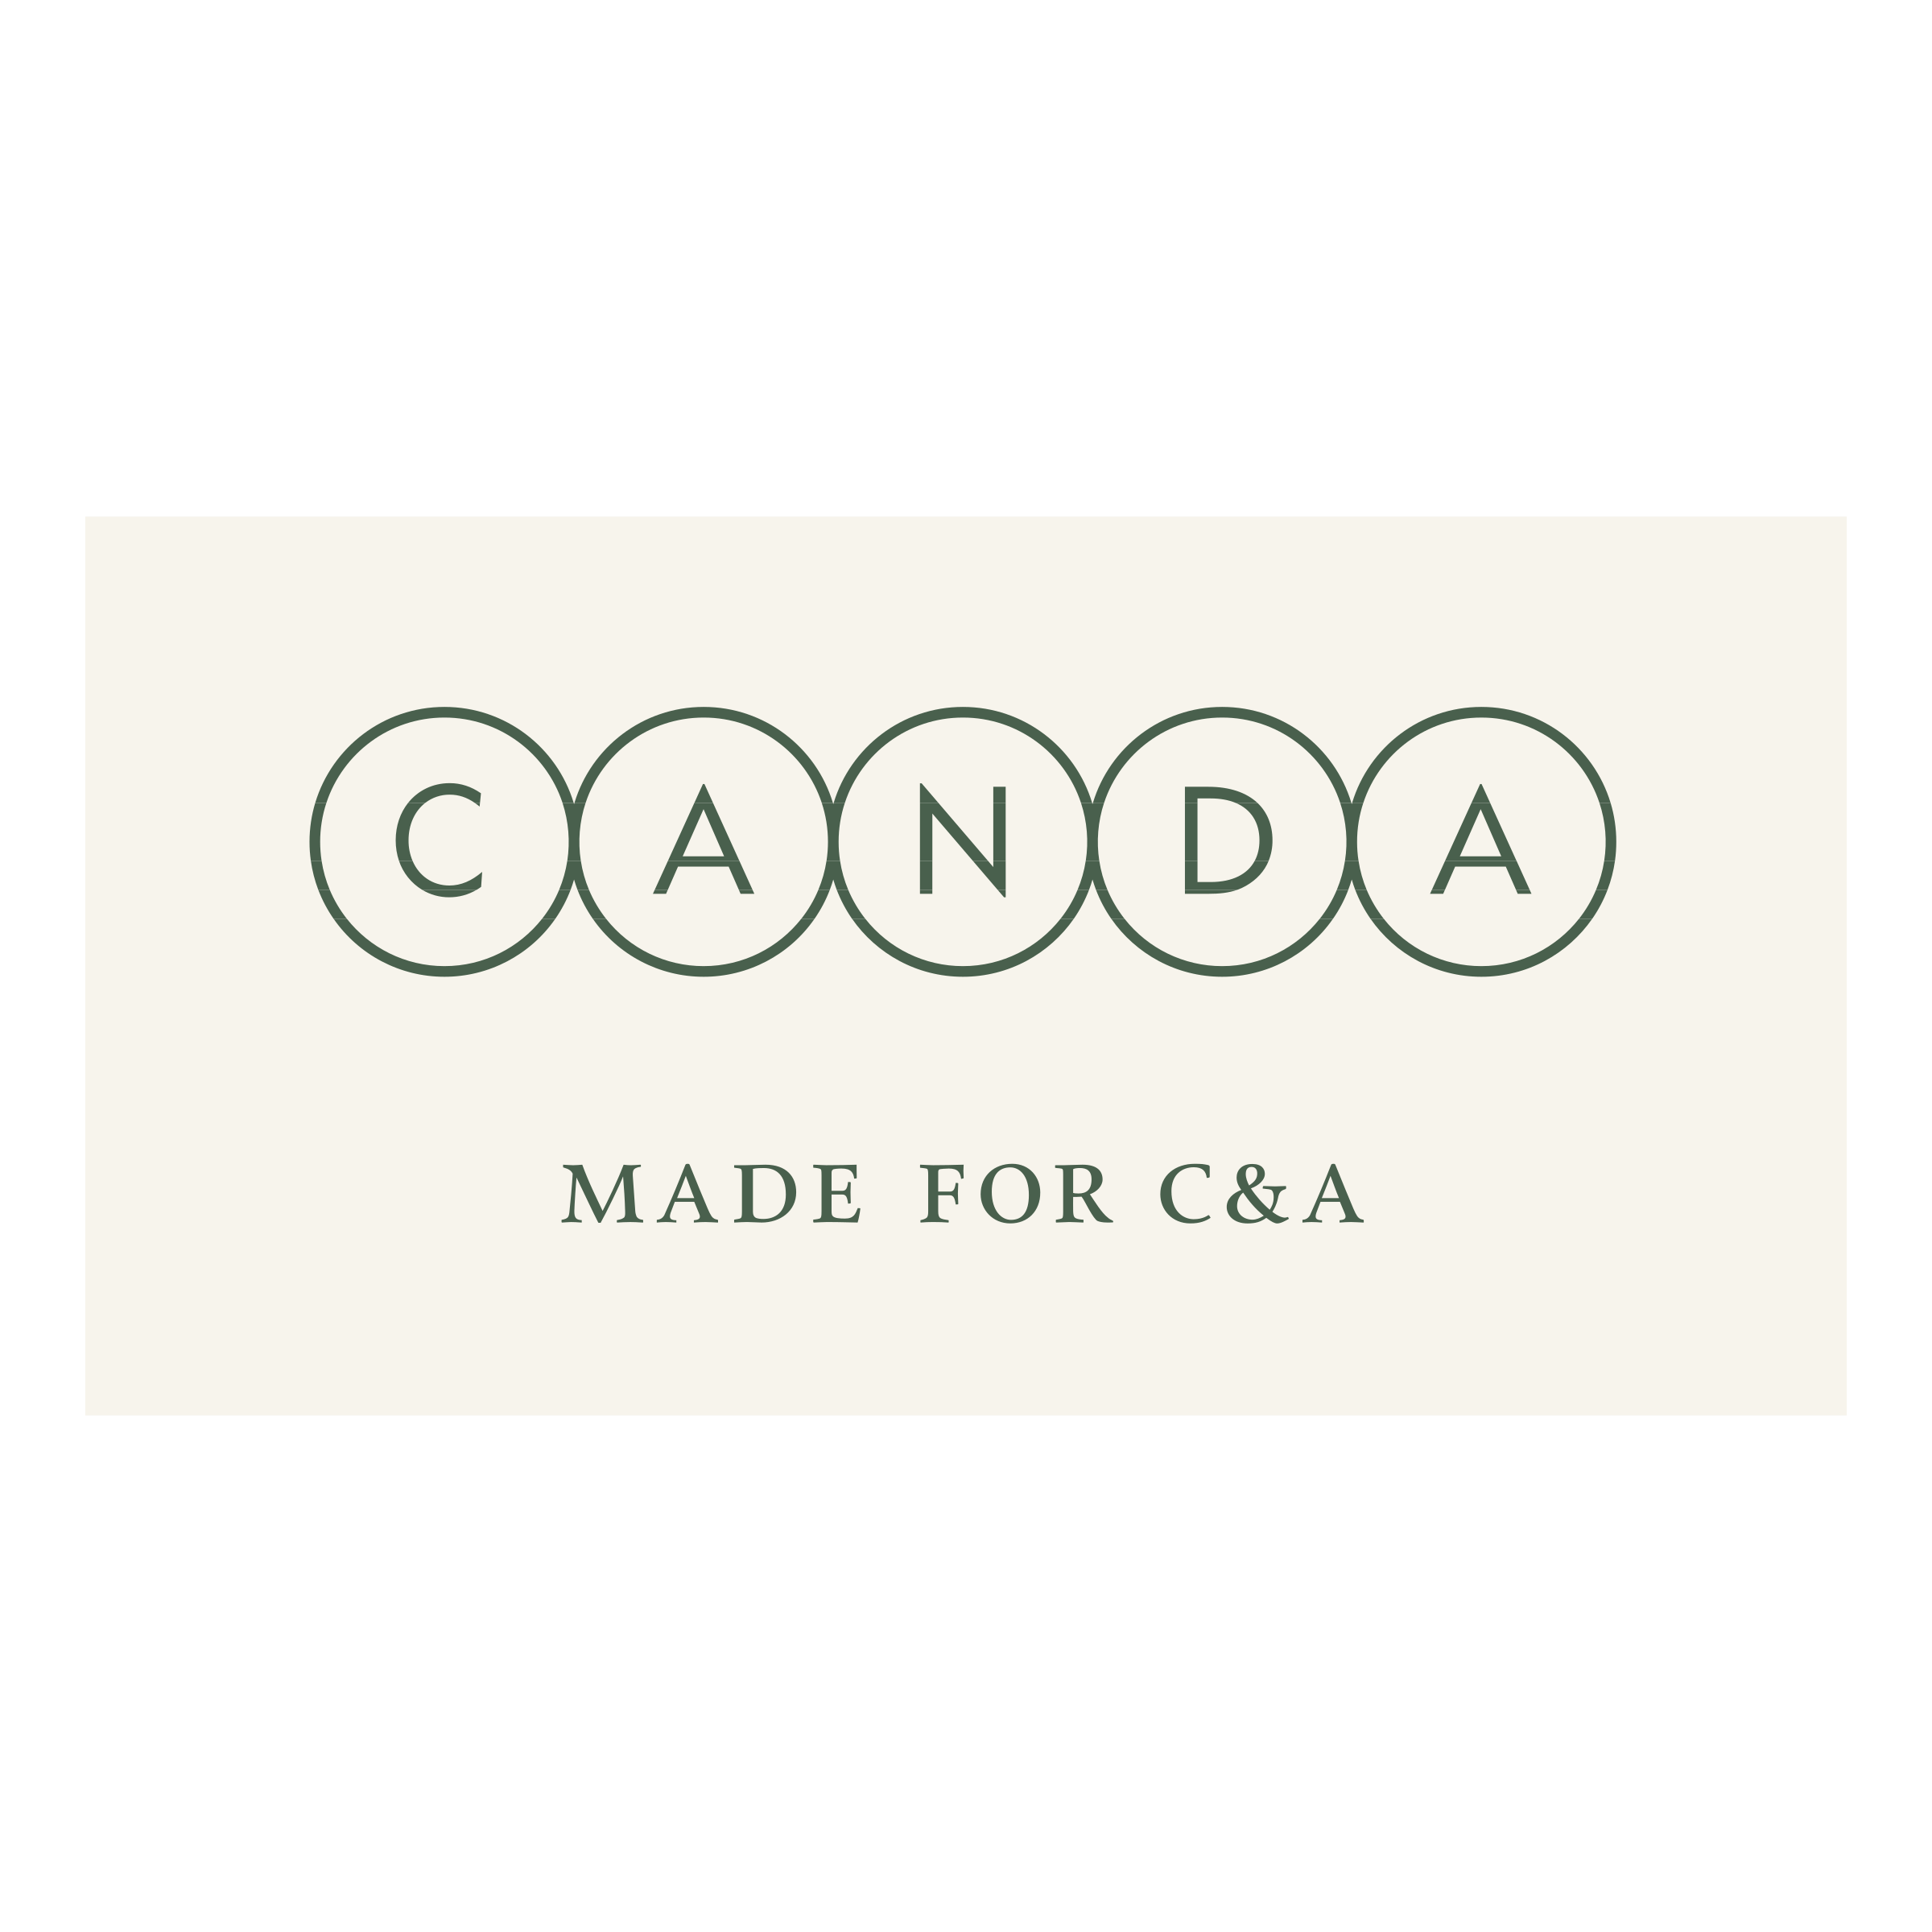 Canda Logo - CandA Logo PNG Transparent & SVG Vector - Freebie Supply